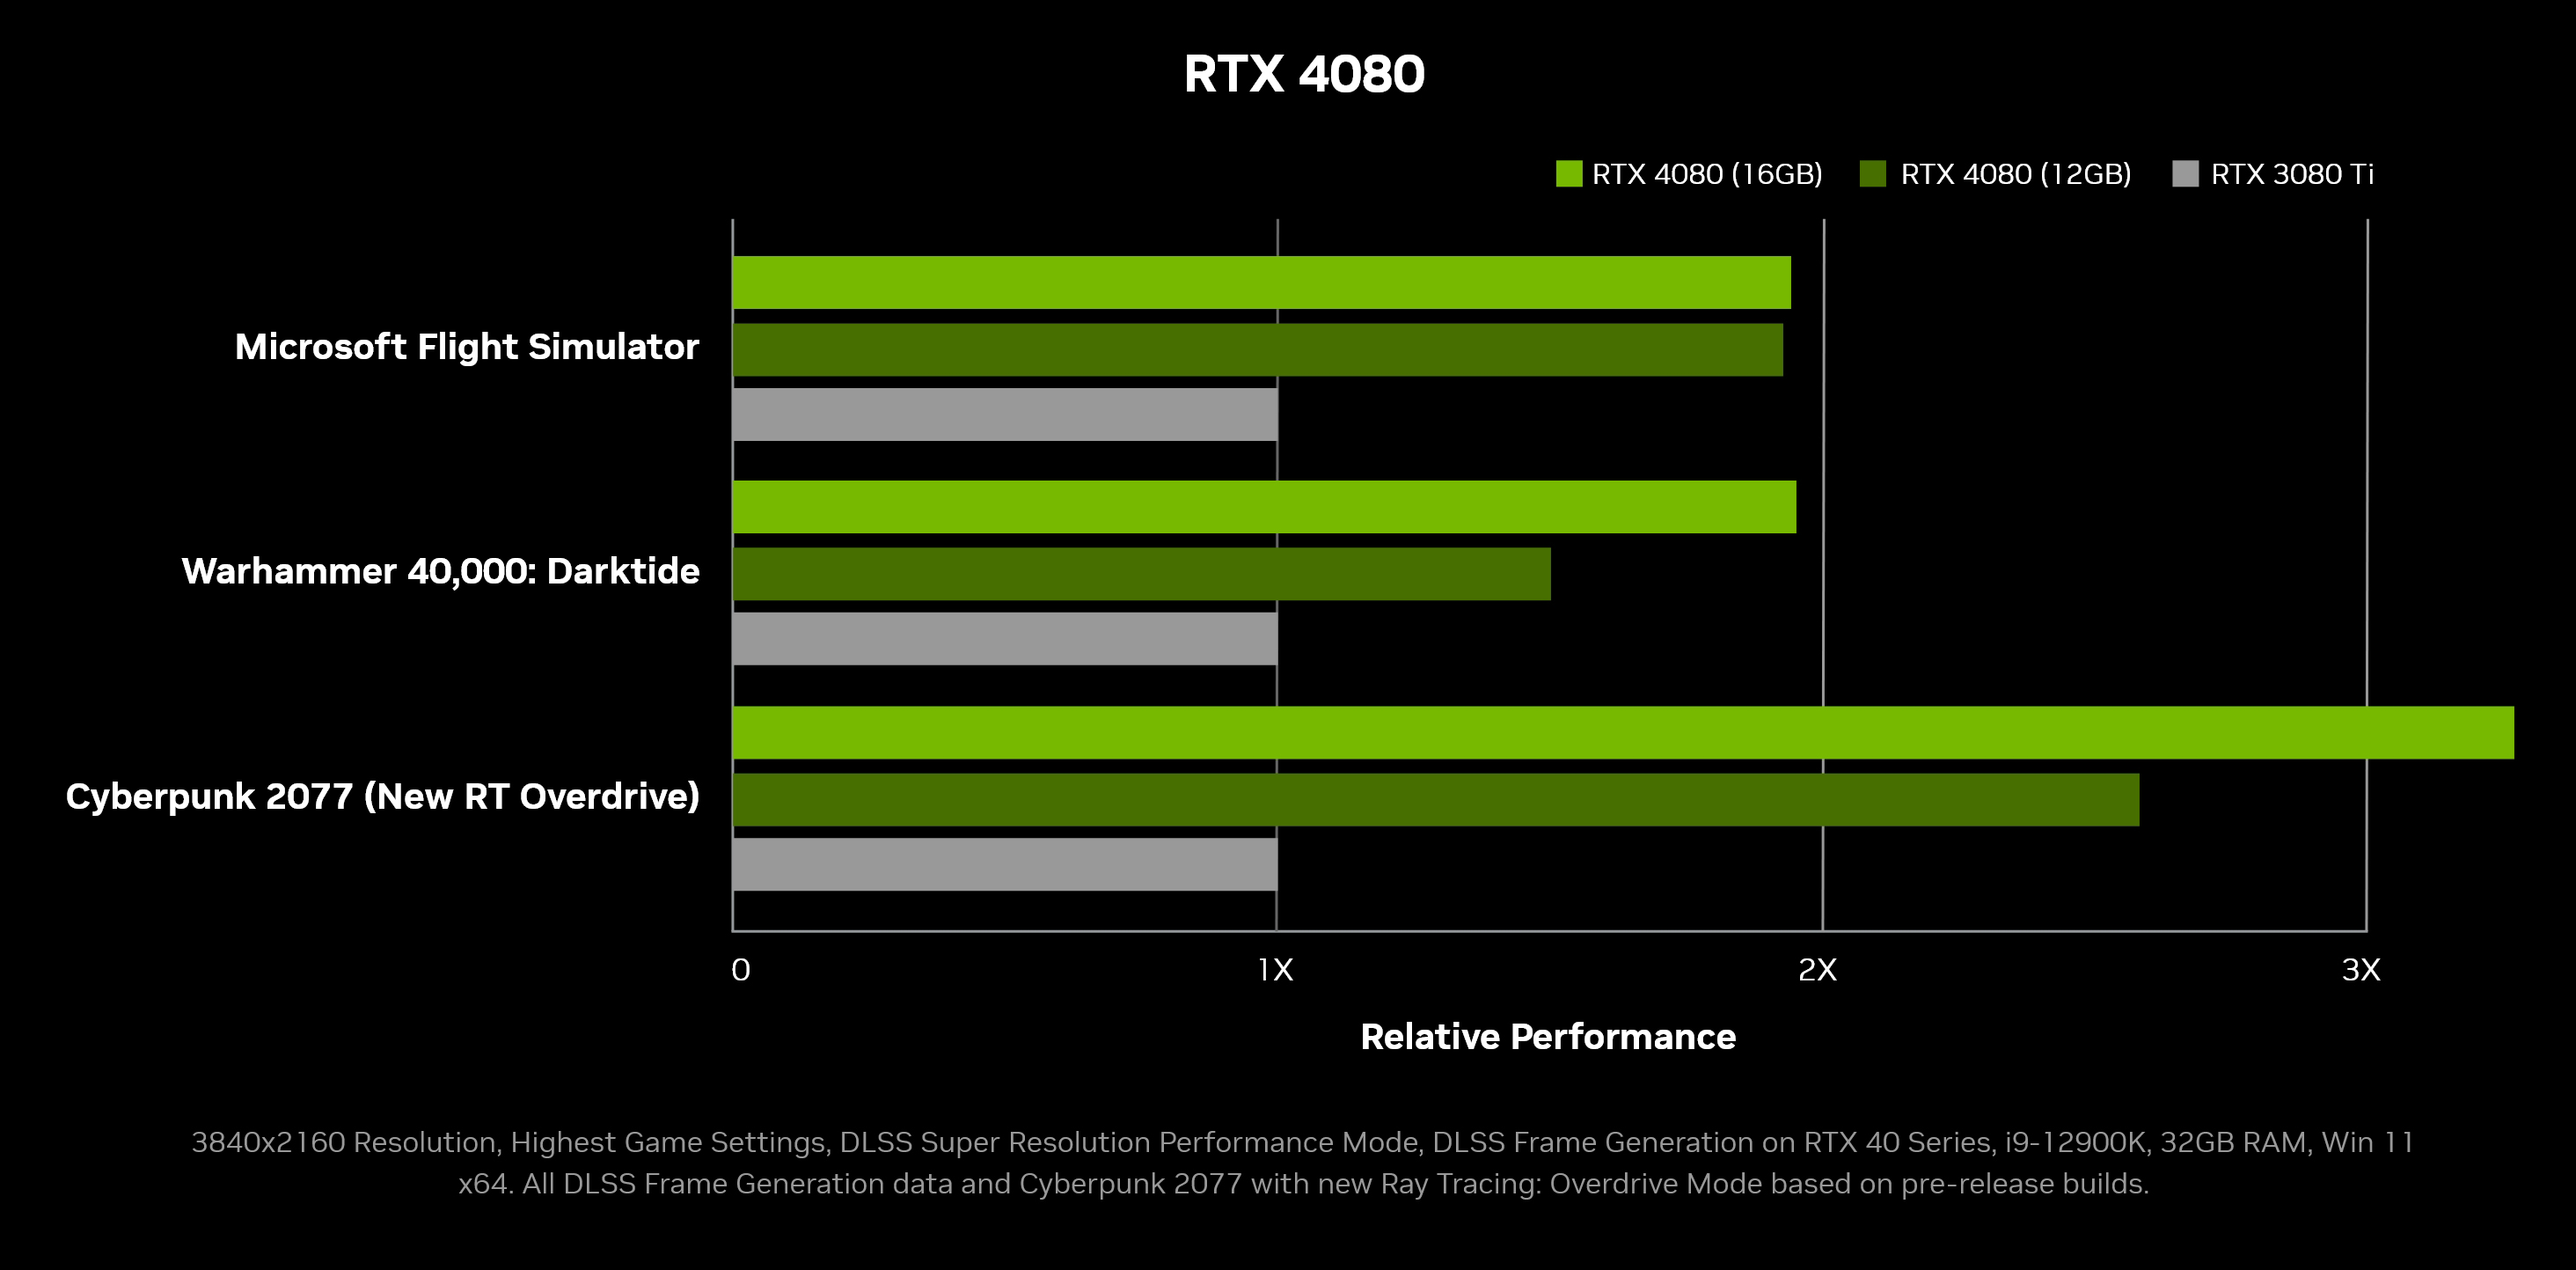 NVIDIA GeForce RTX 4080 SUPER, RTX 4070 Ti SUPER, RTX 4070 SUPER teased